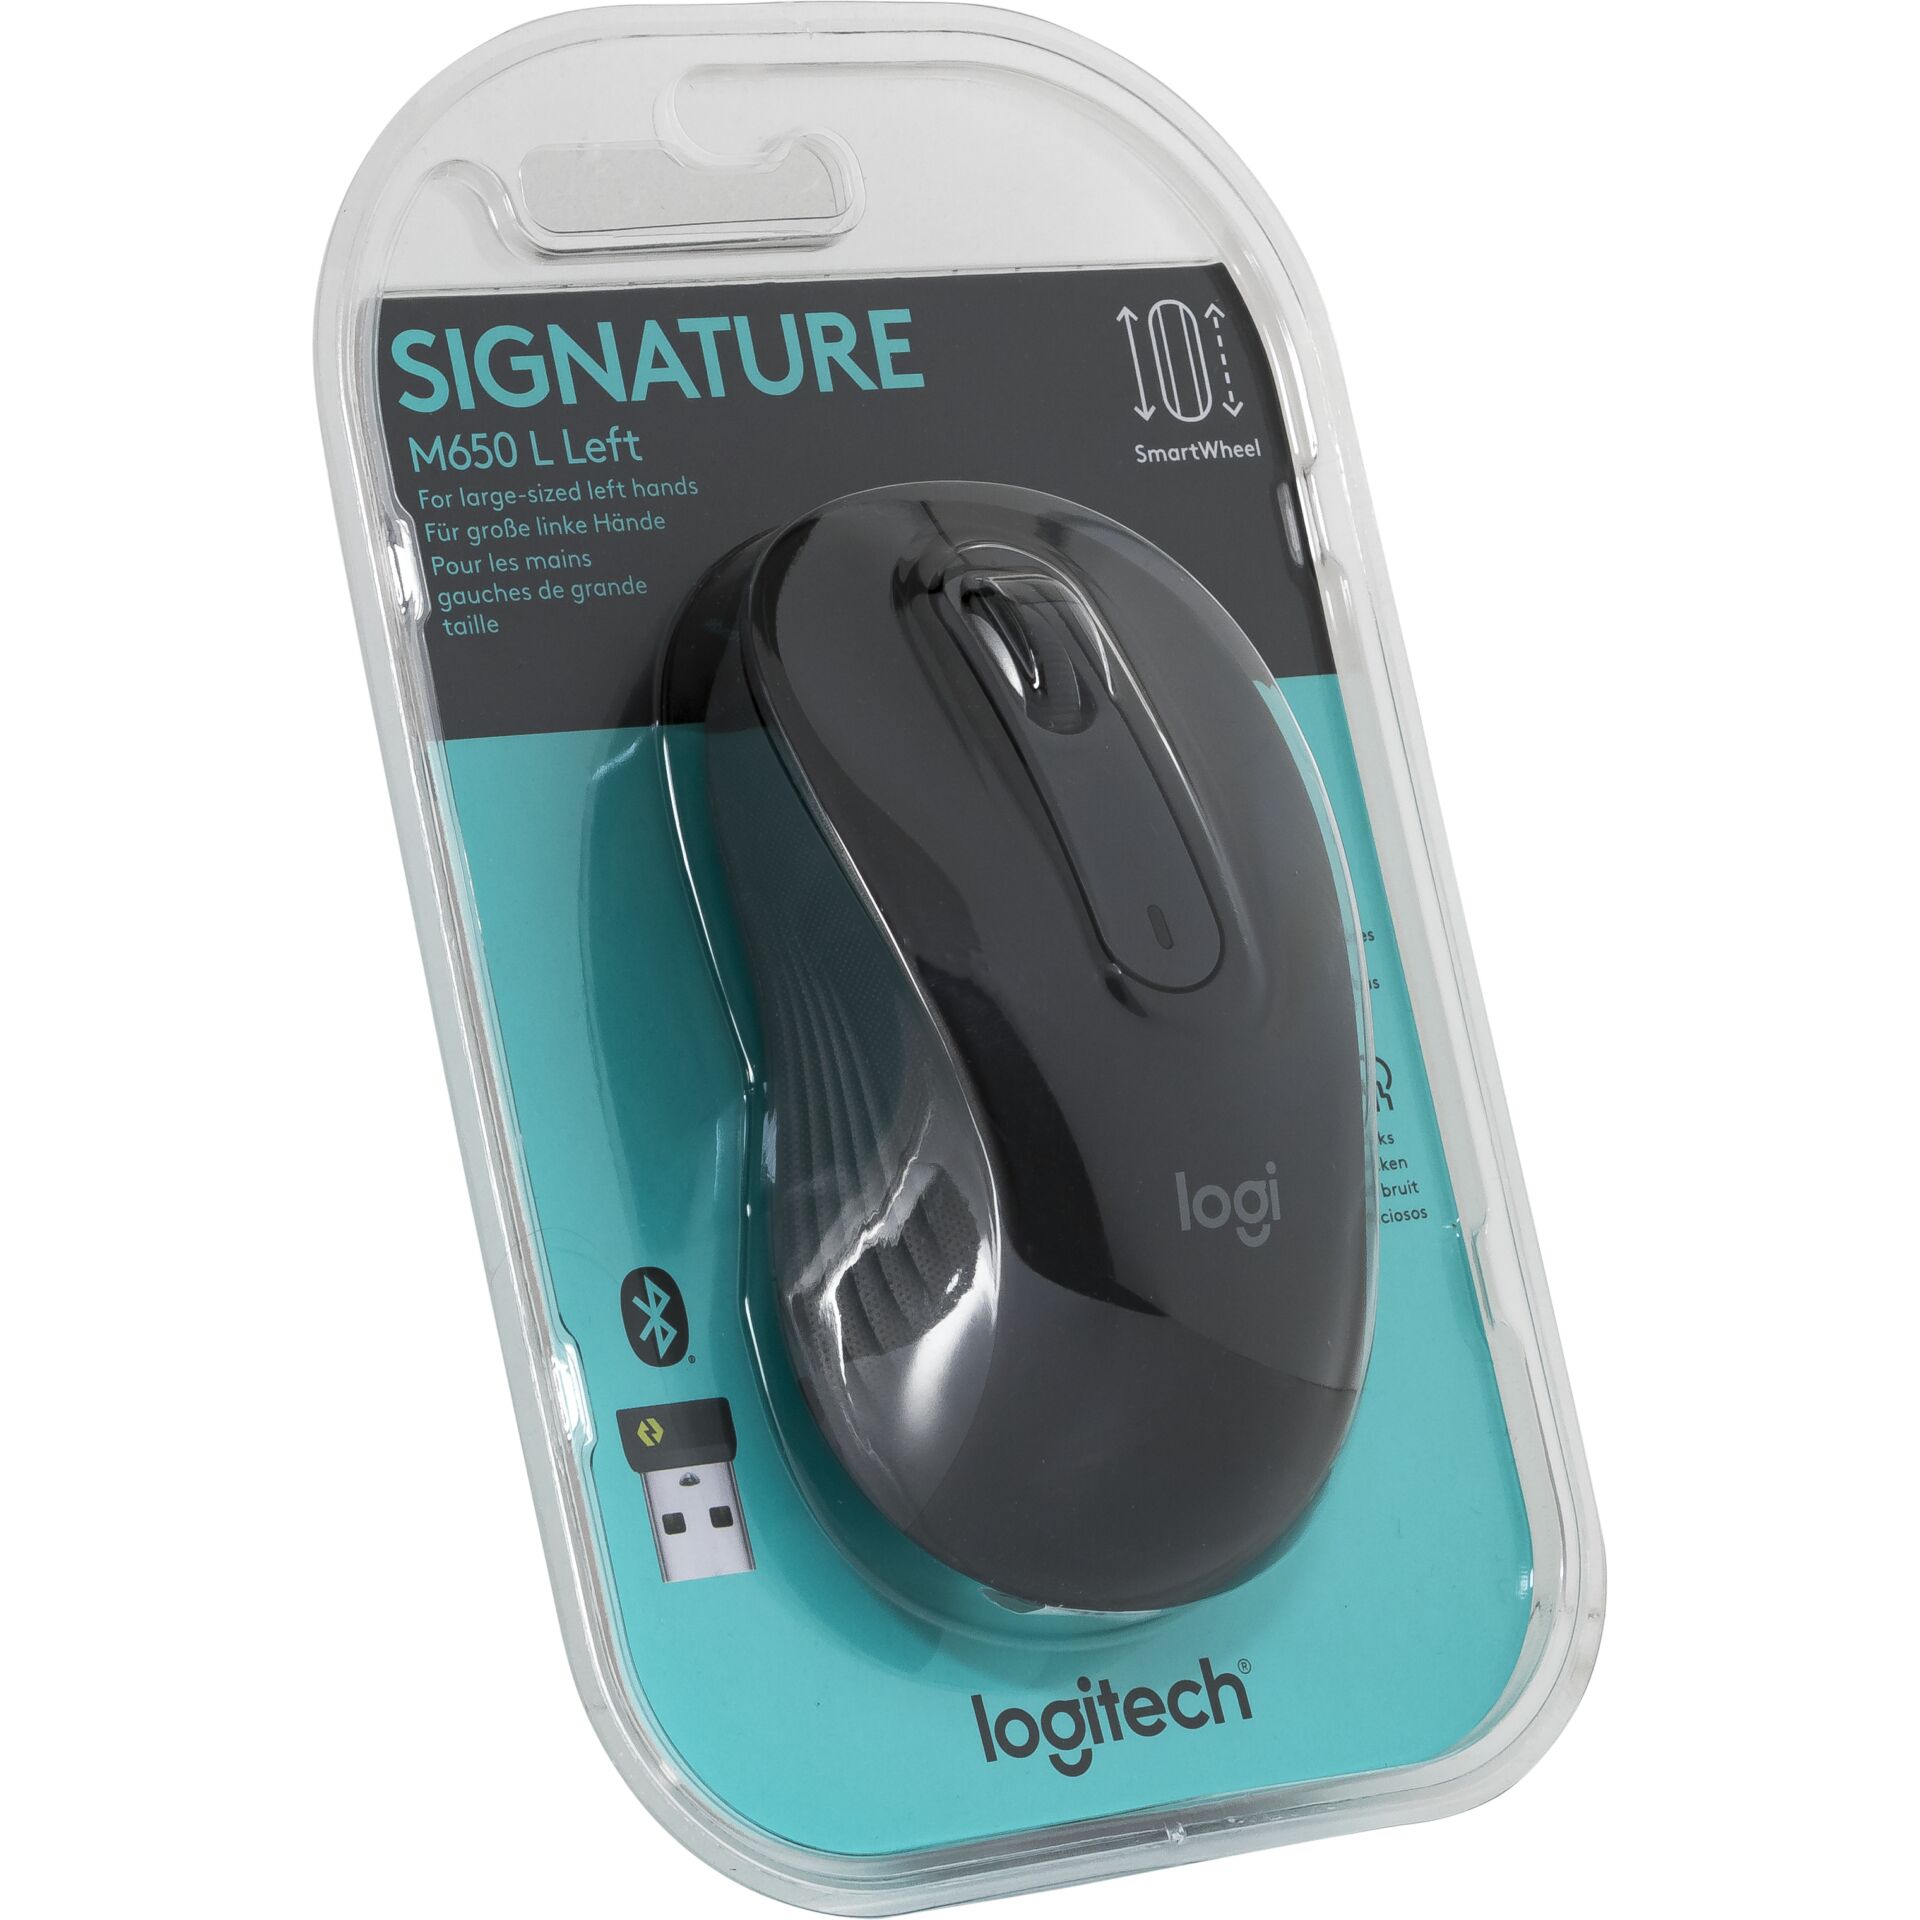 Logitech Signature M650 Large Left Graphit, Maus, linkshände kabellos, Logi Bolt